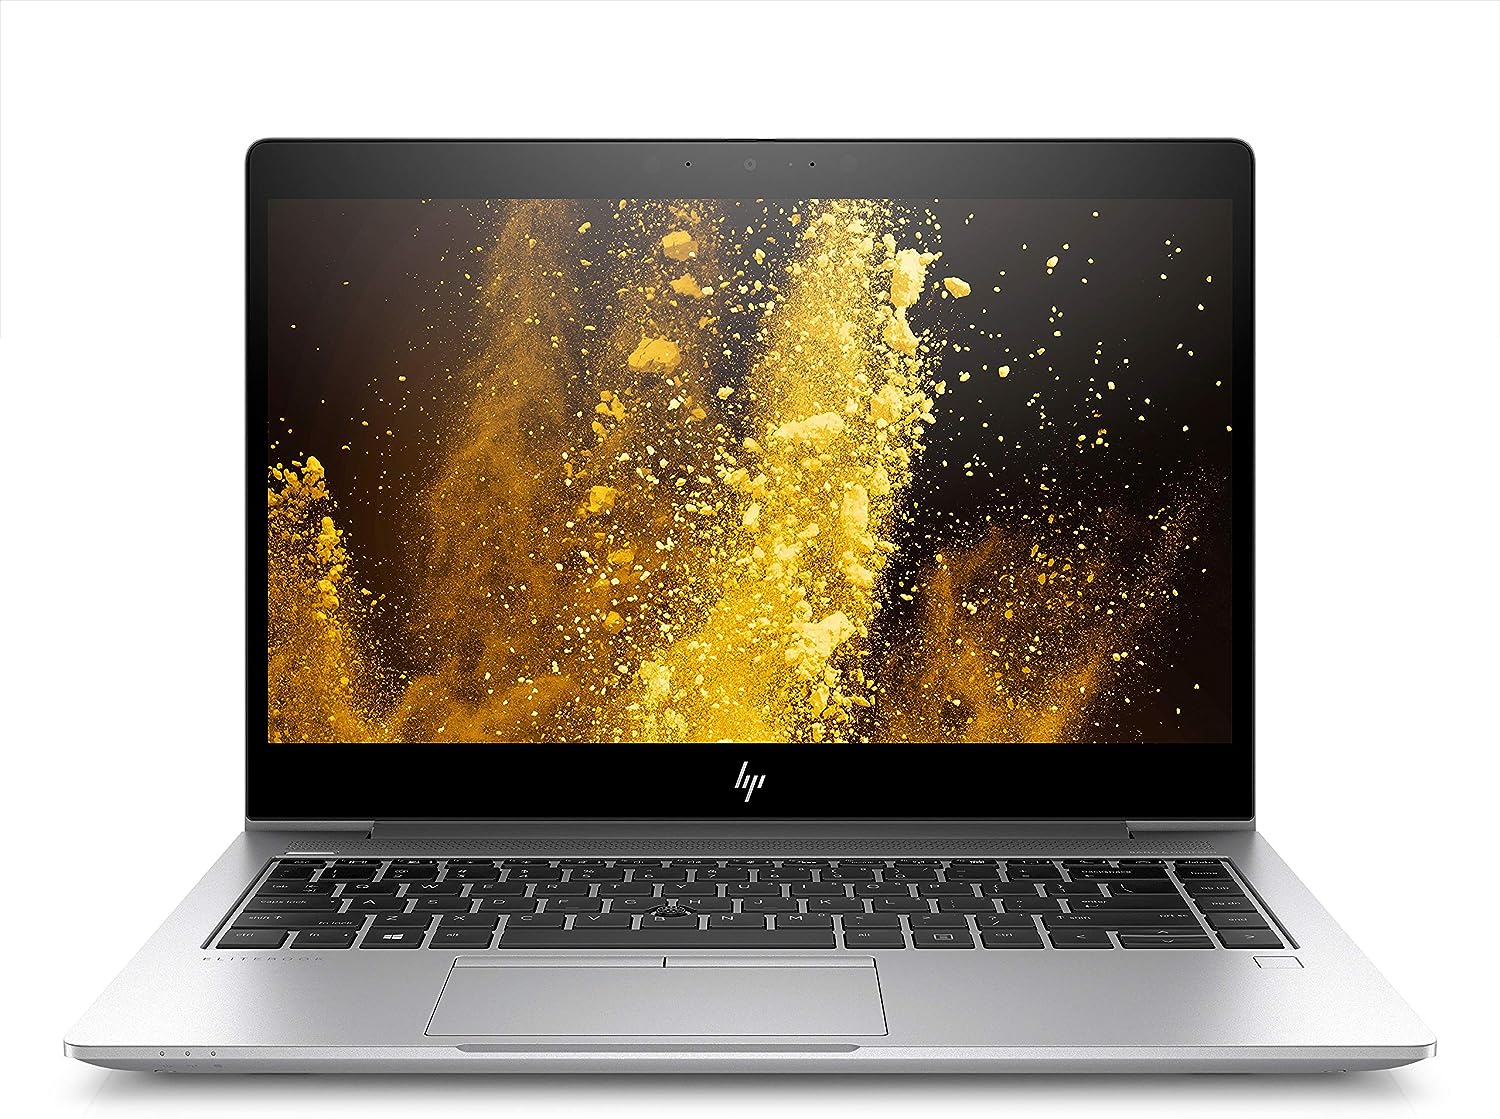 Refurbished HP 840 G6 i7 Laptop, 8th Gen, 16GB Ram, 512 Gb SSD